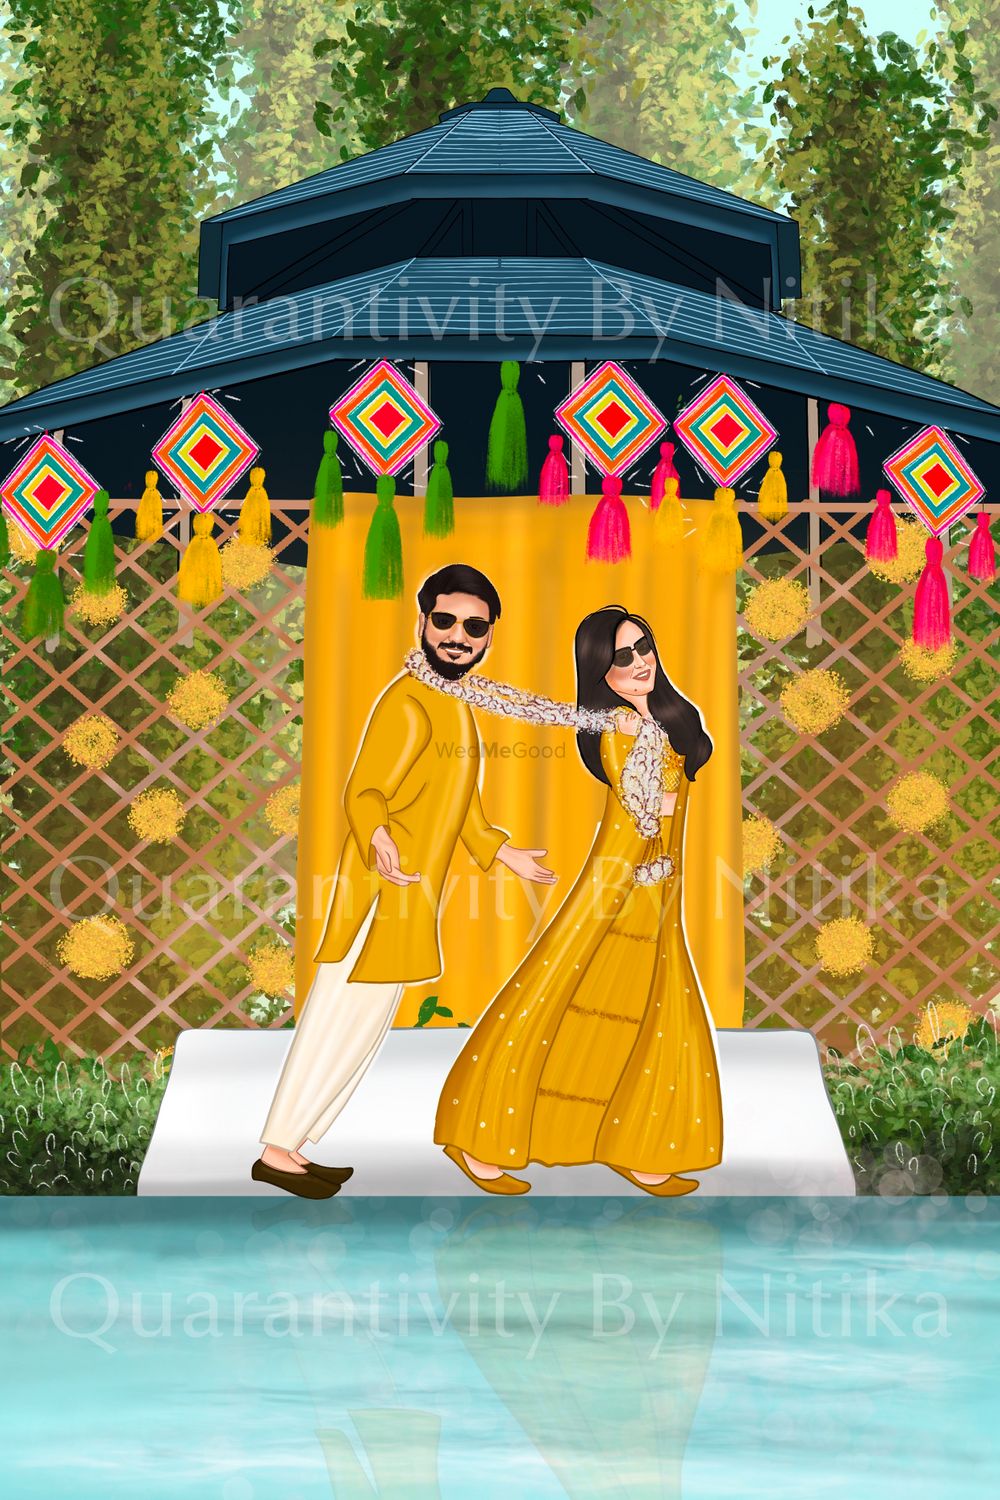 Photo From Caricature Beach Wedding Invite - Goa  - By Quarantivity By Nitika